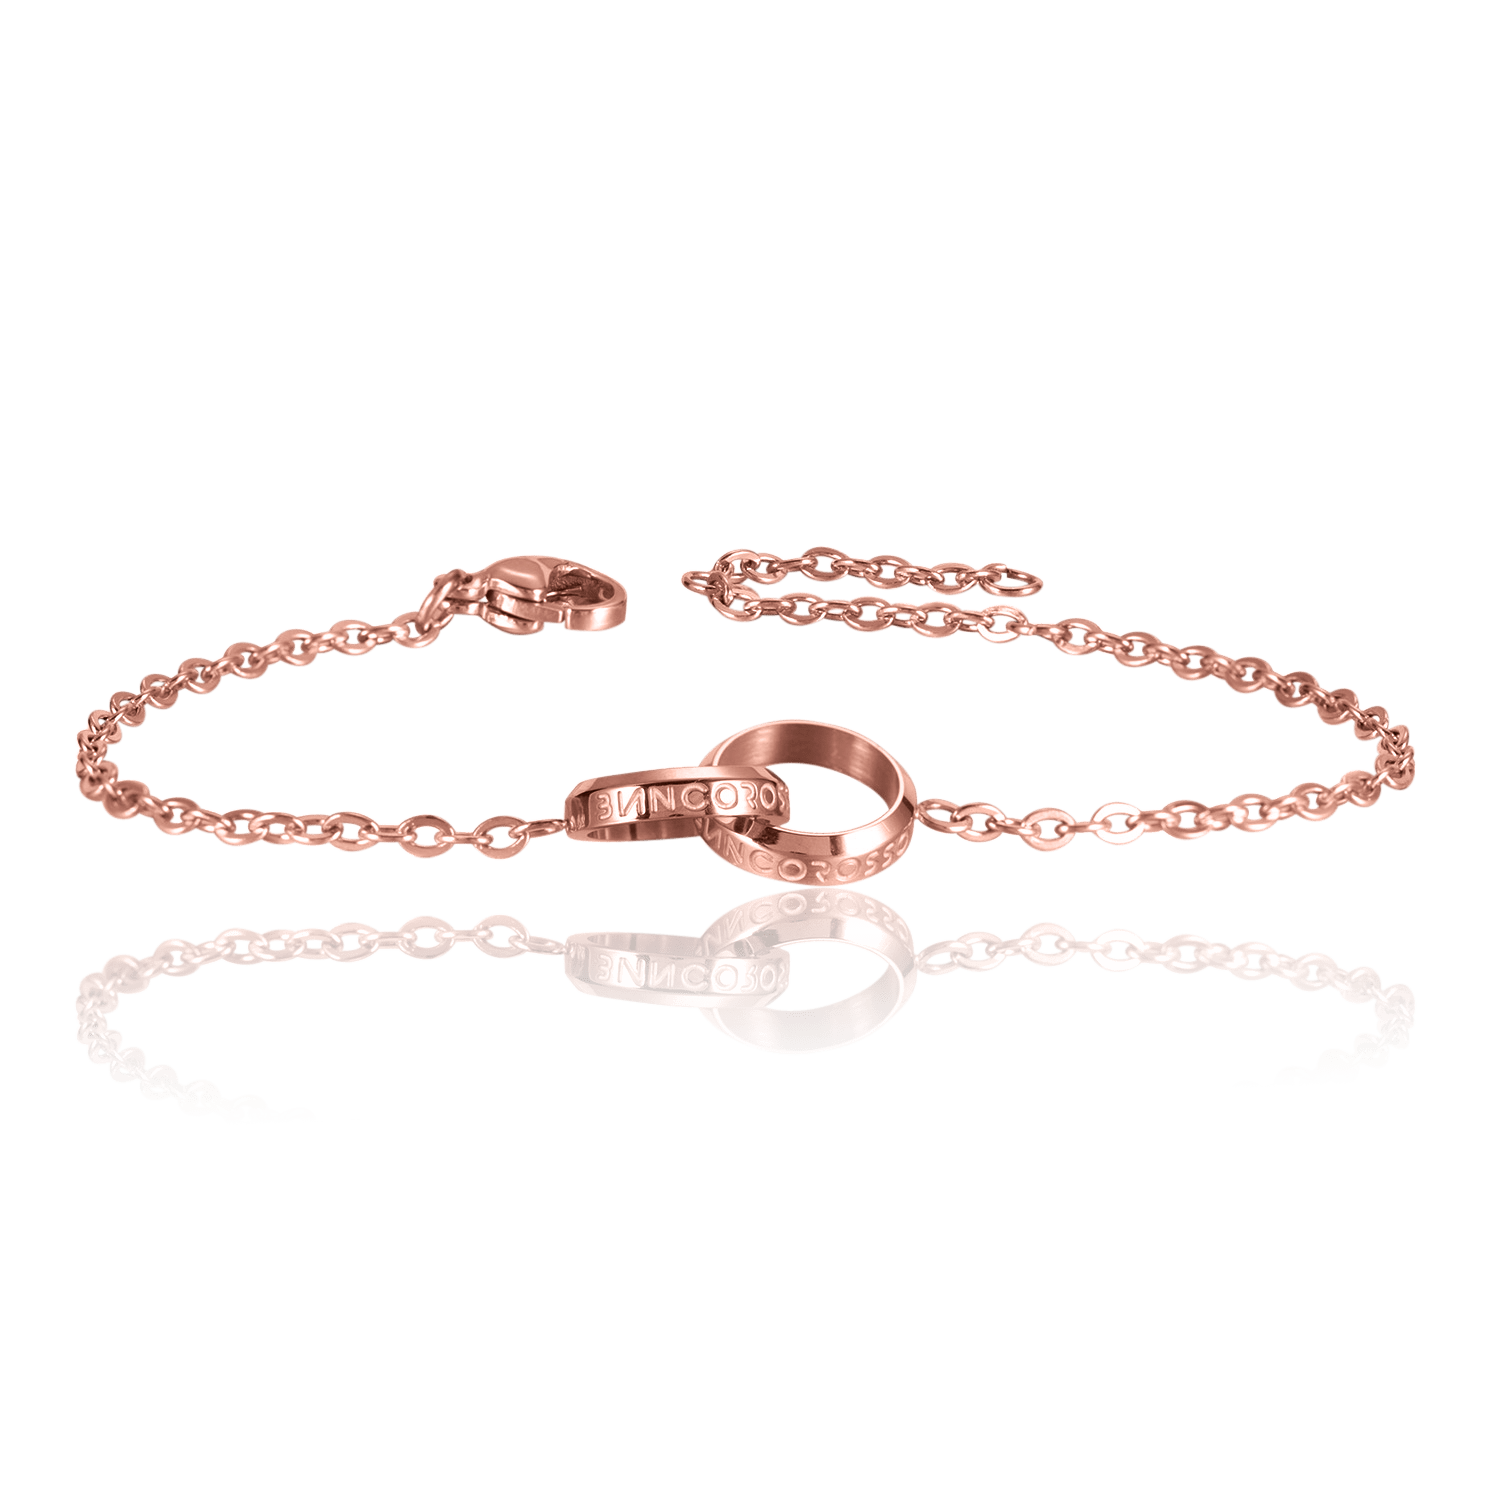 bianco rosso Bracelets Mother & Daughter - Eternity Bracelet cyprus greece jewelry gift free shipping europe worldwide